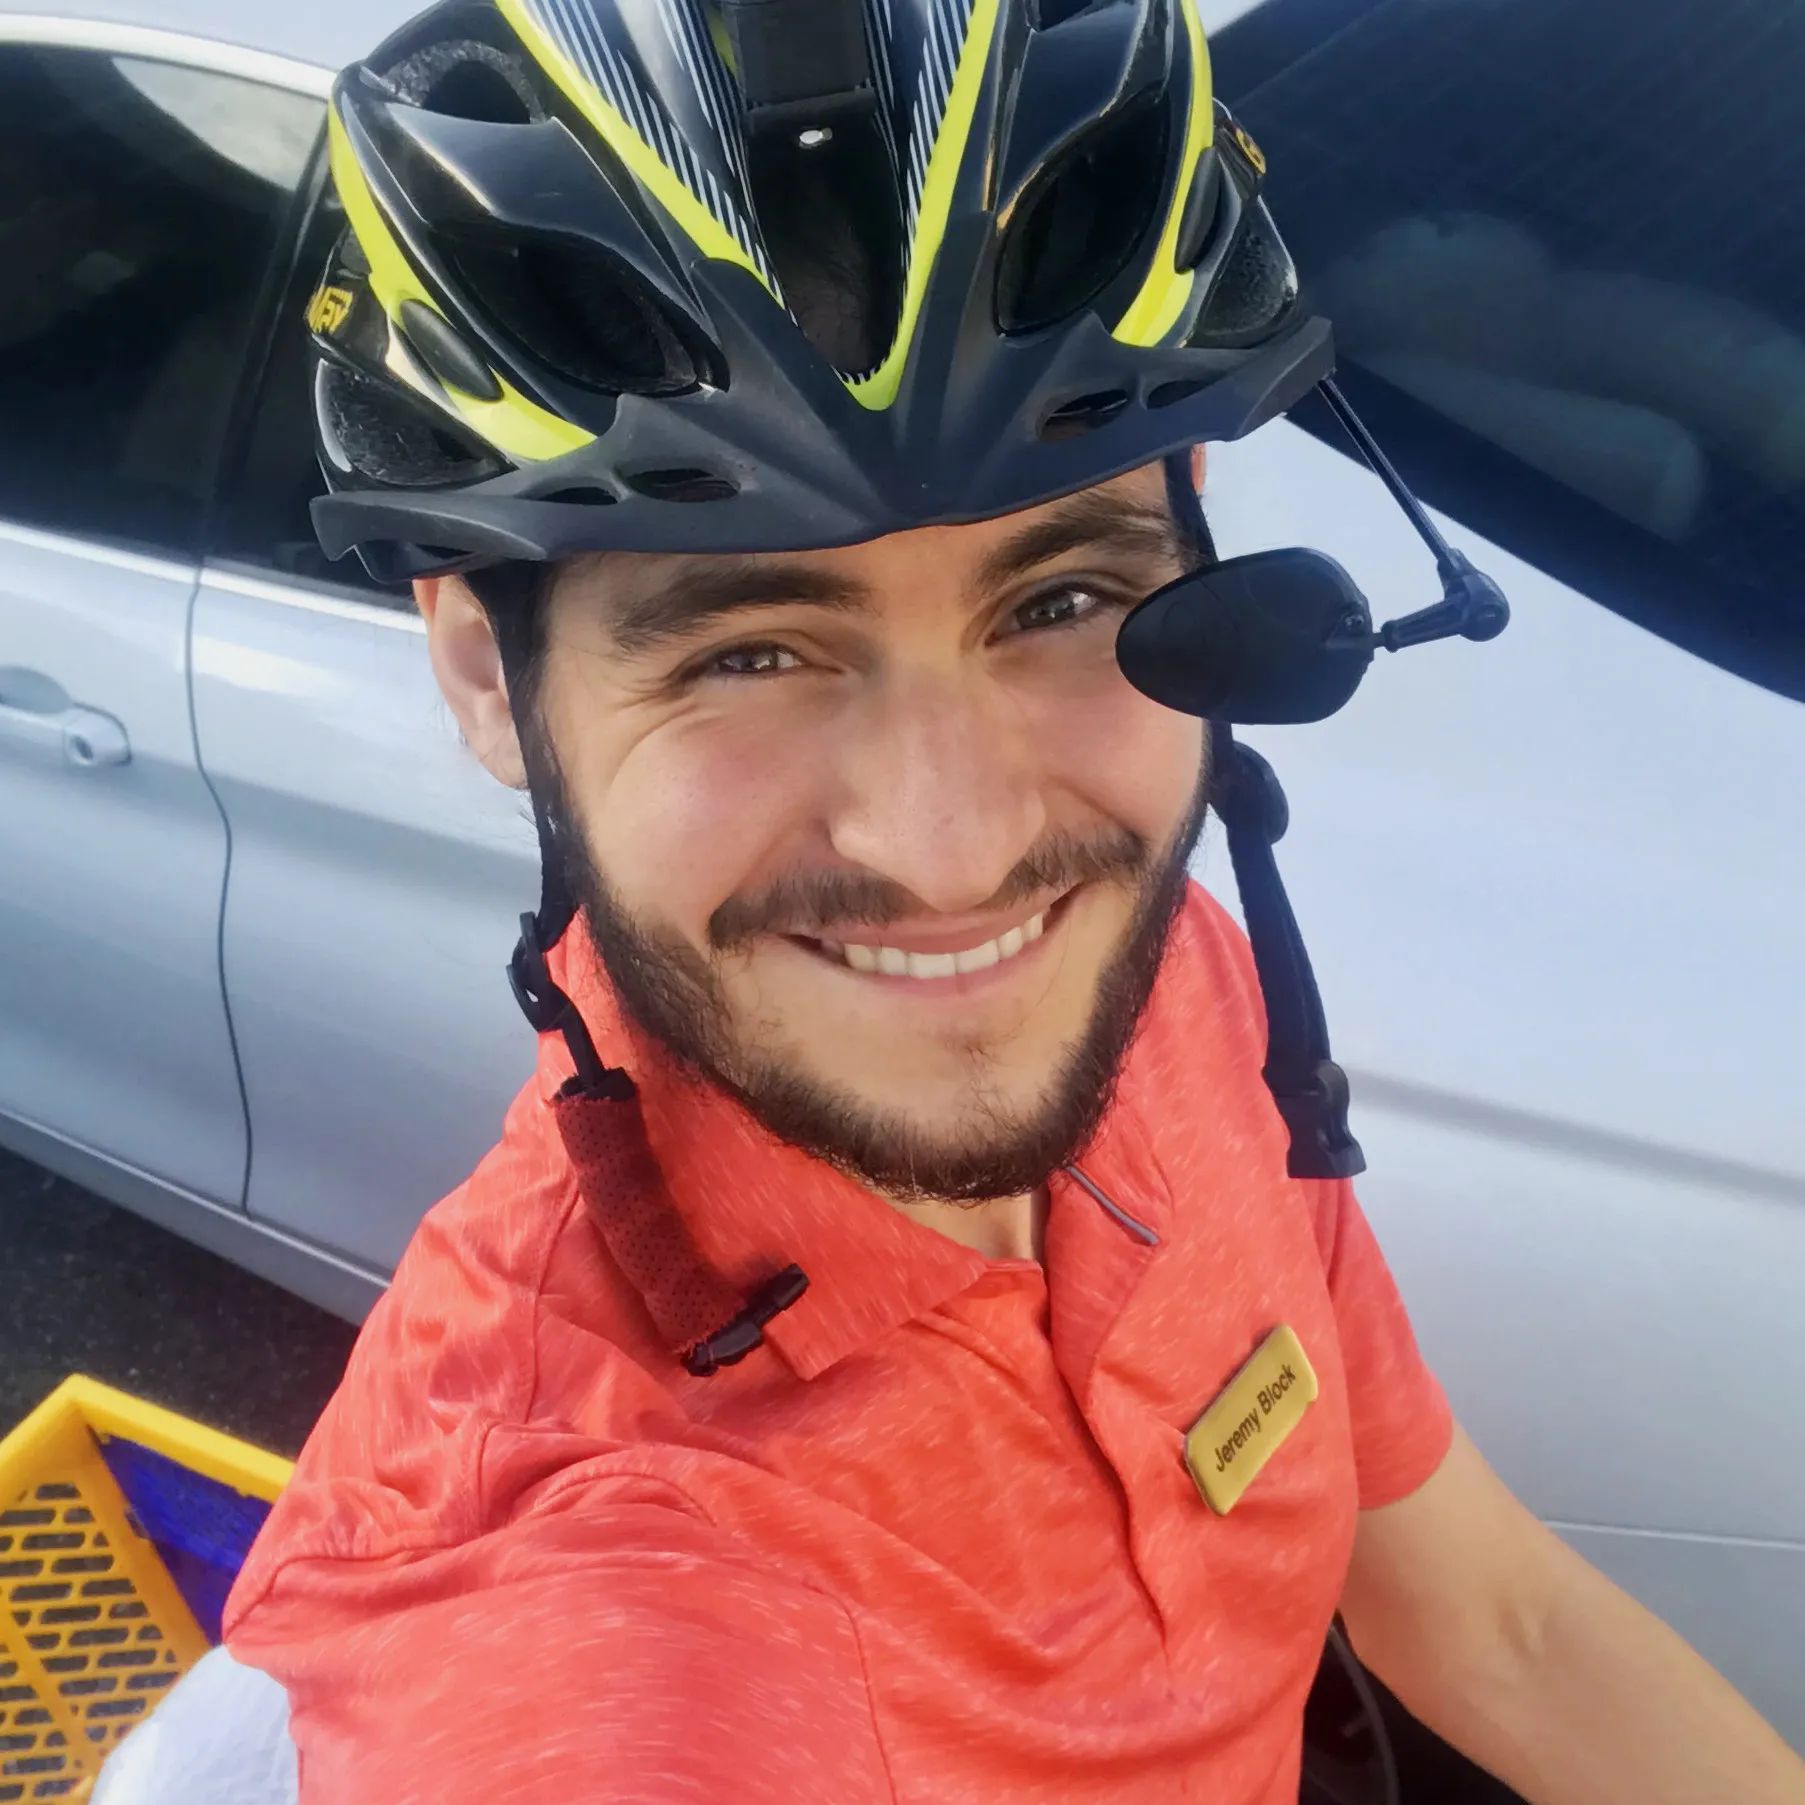 profile photo of Jeremy riding his bike